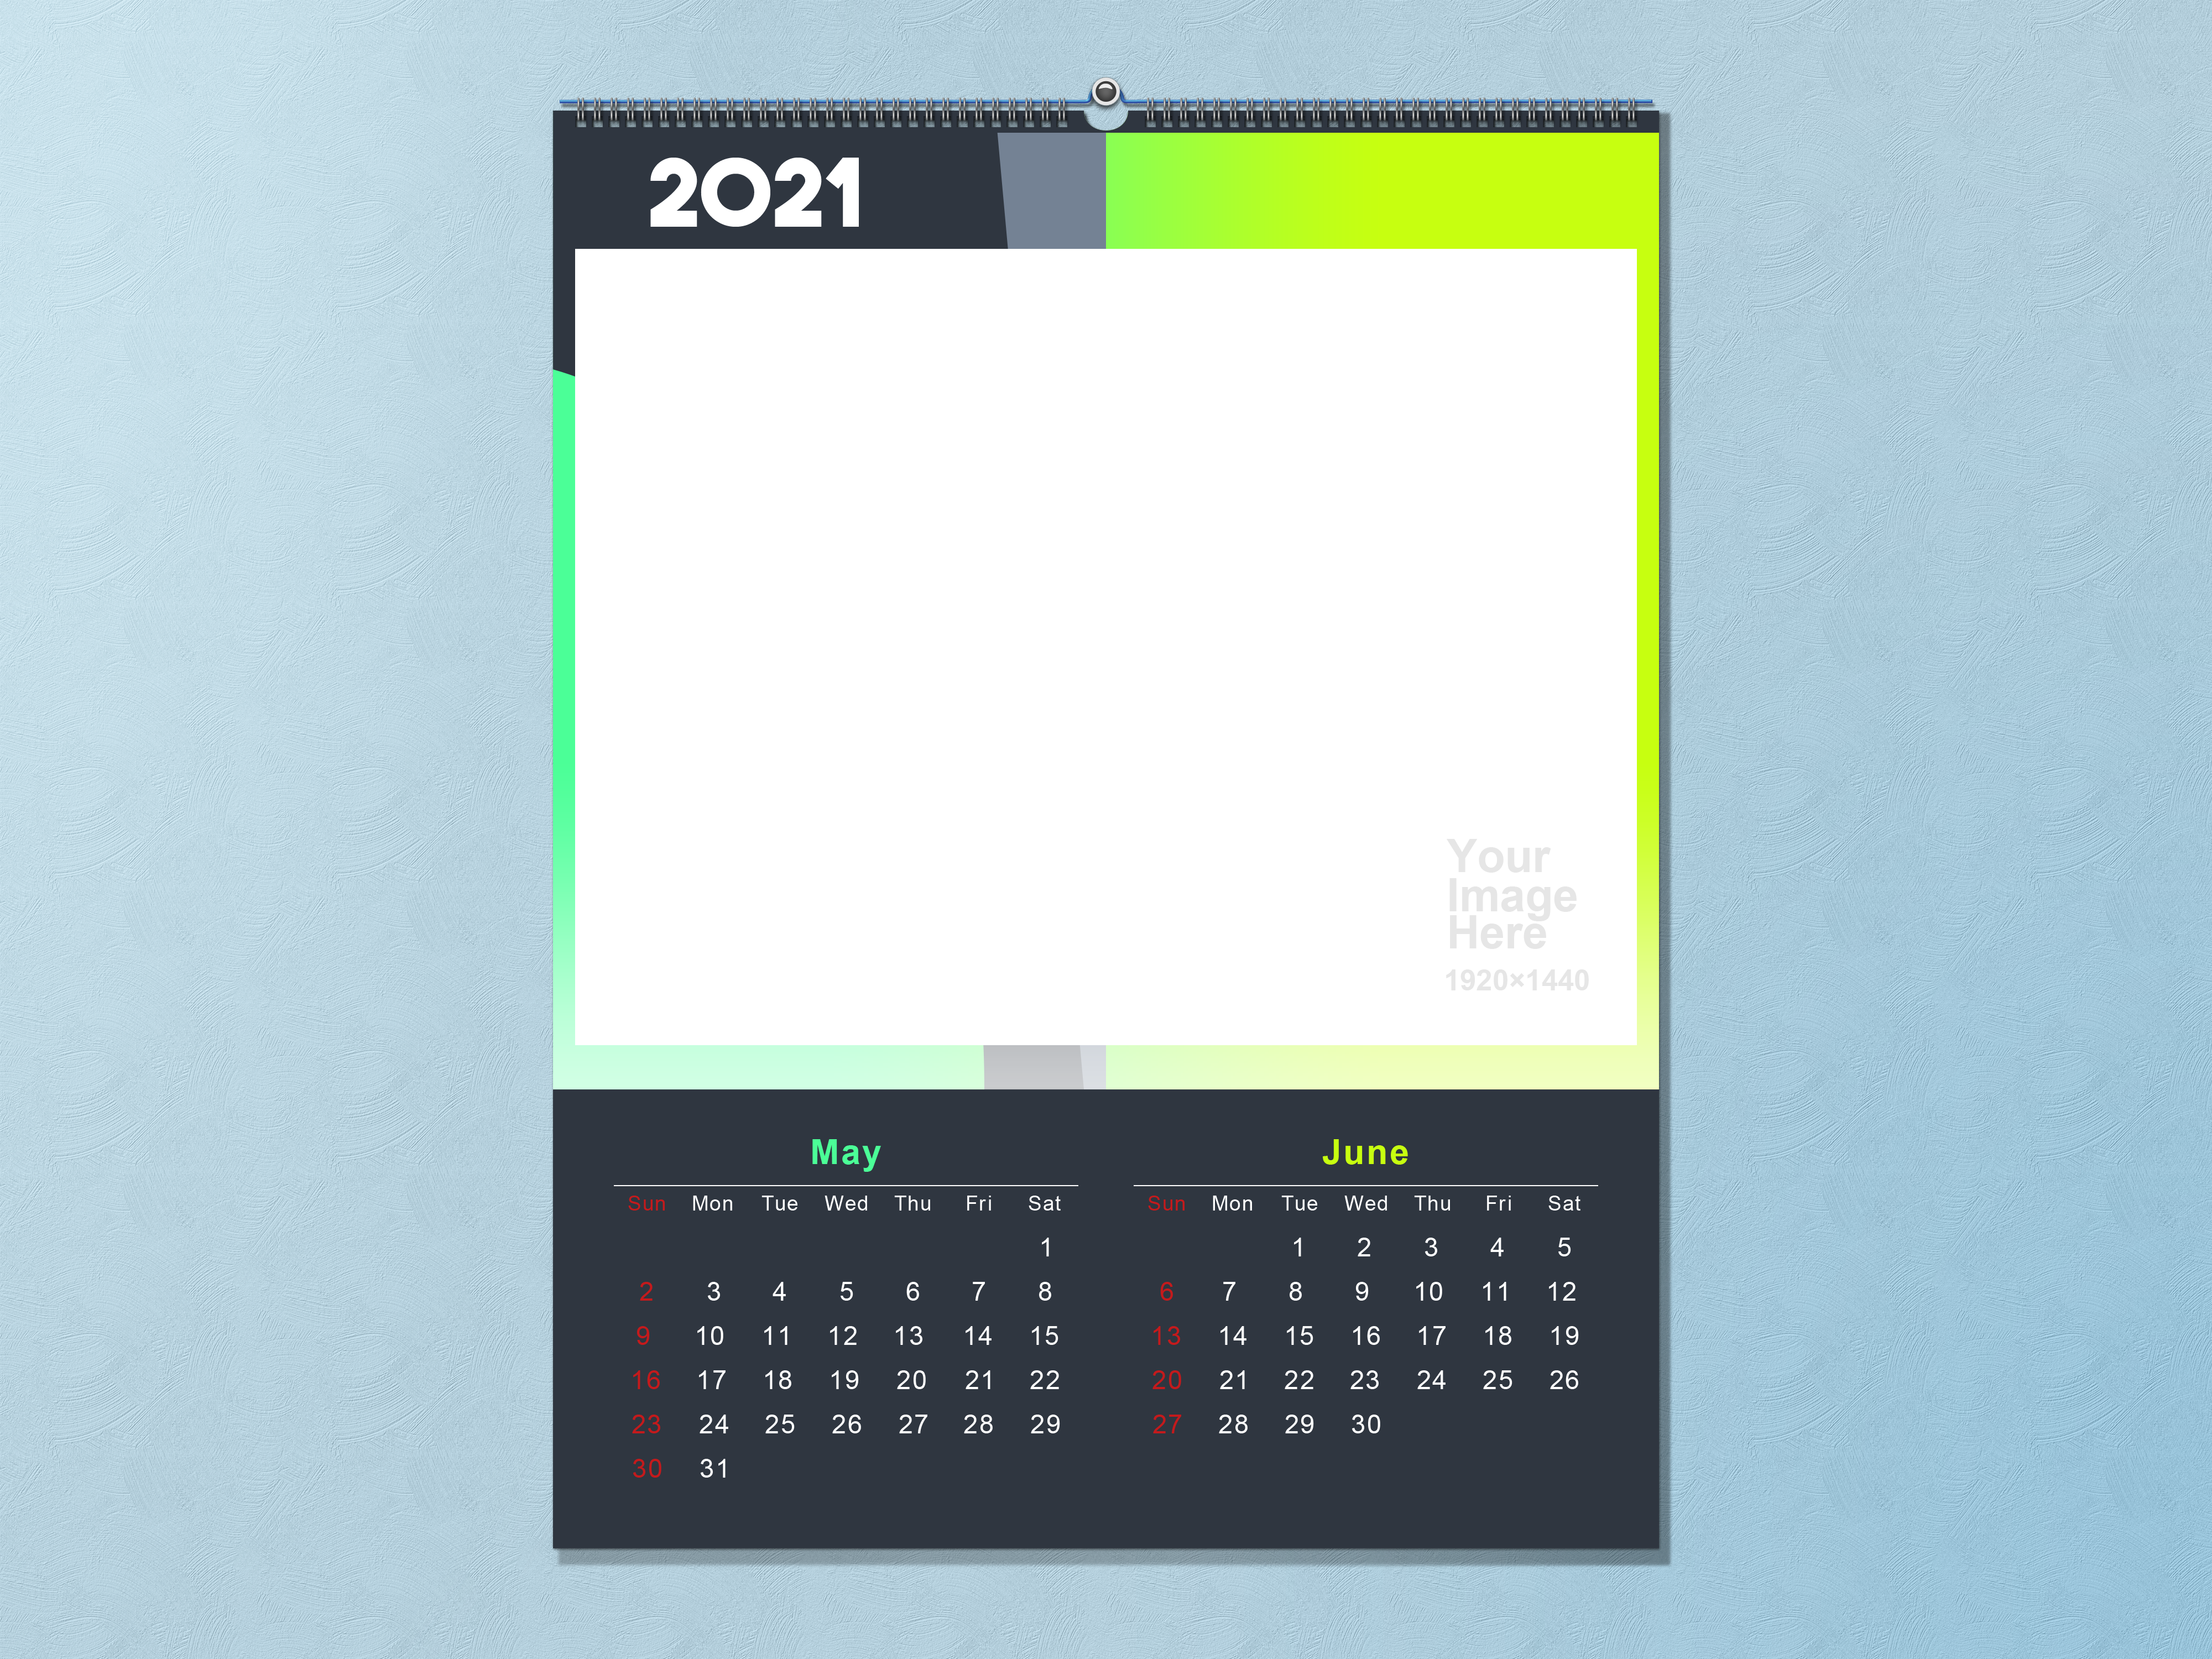 2021 Calendar Template May June 4000x3000